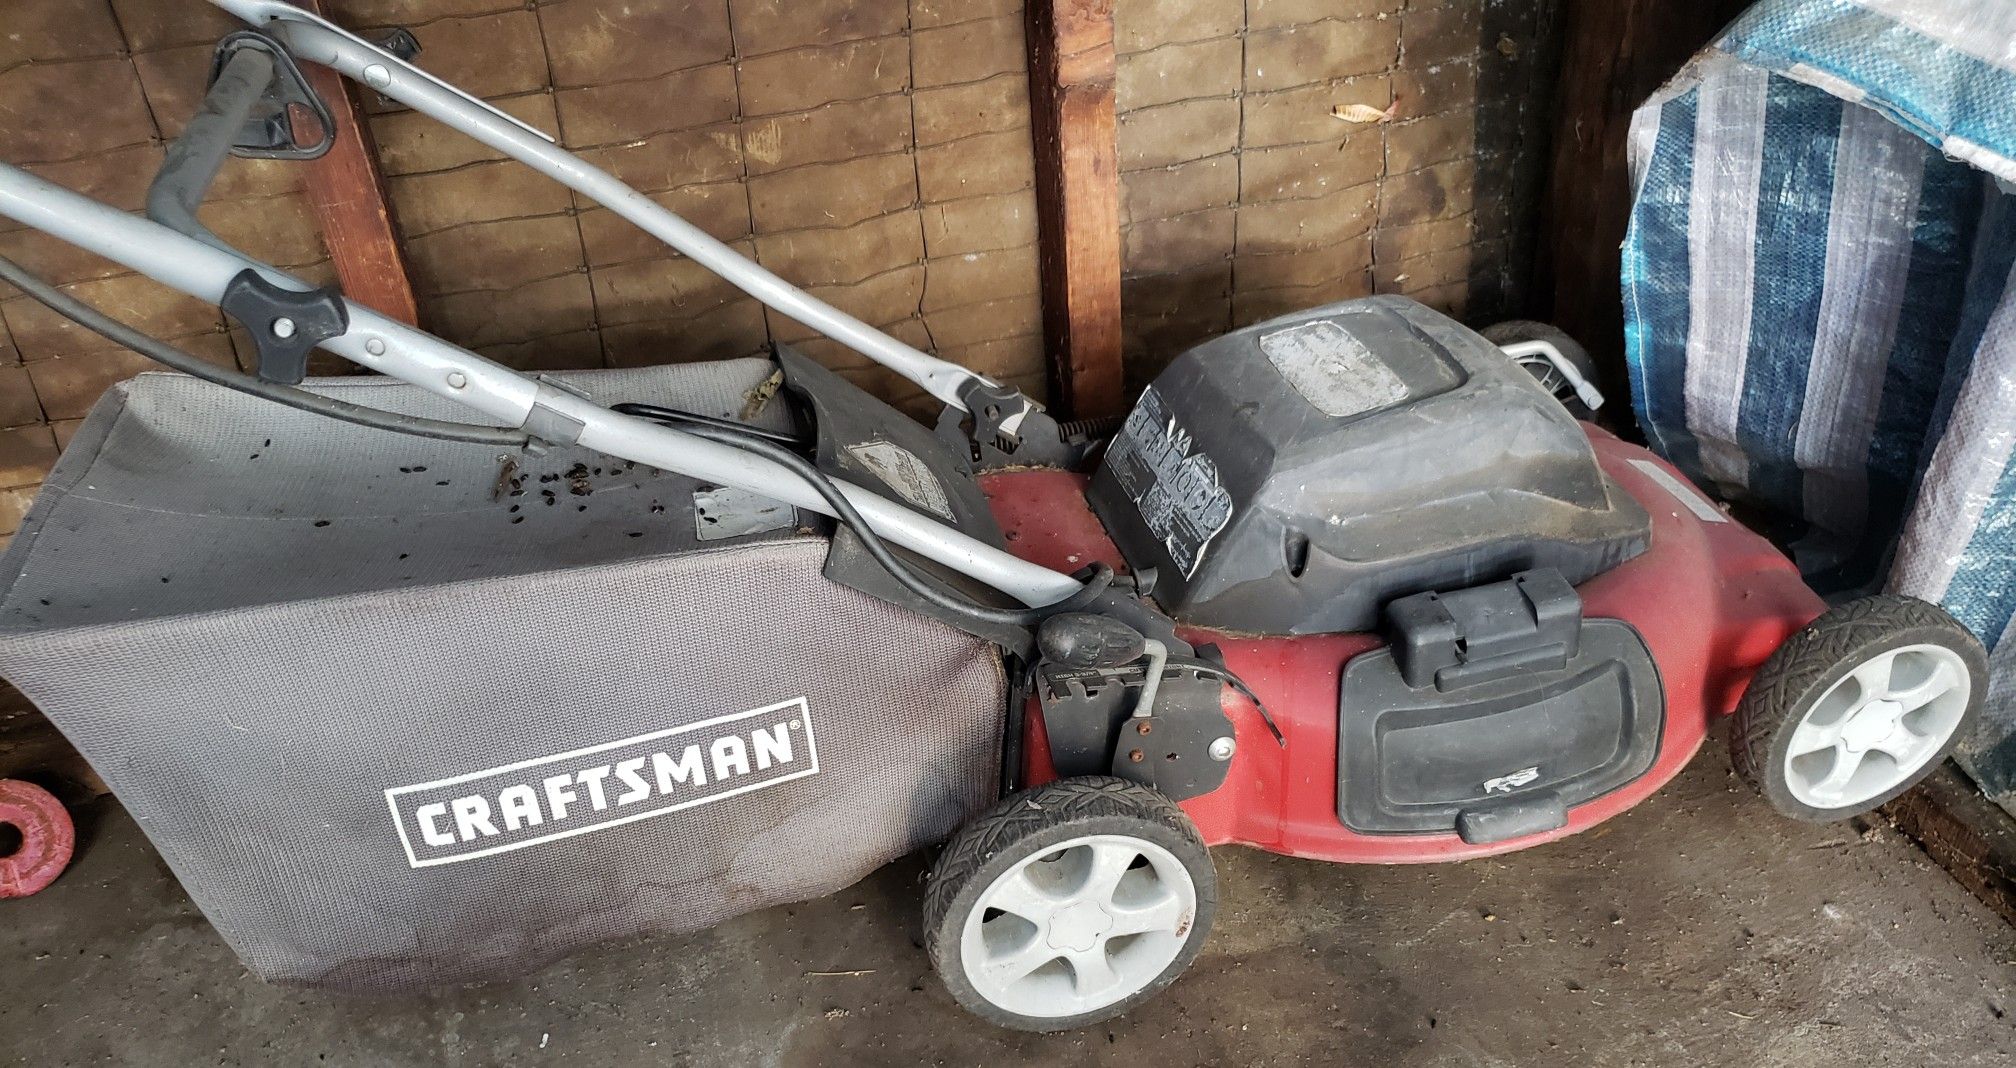 Craftsman electric lawn mower